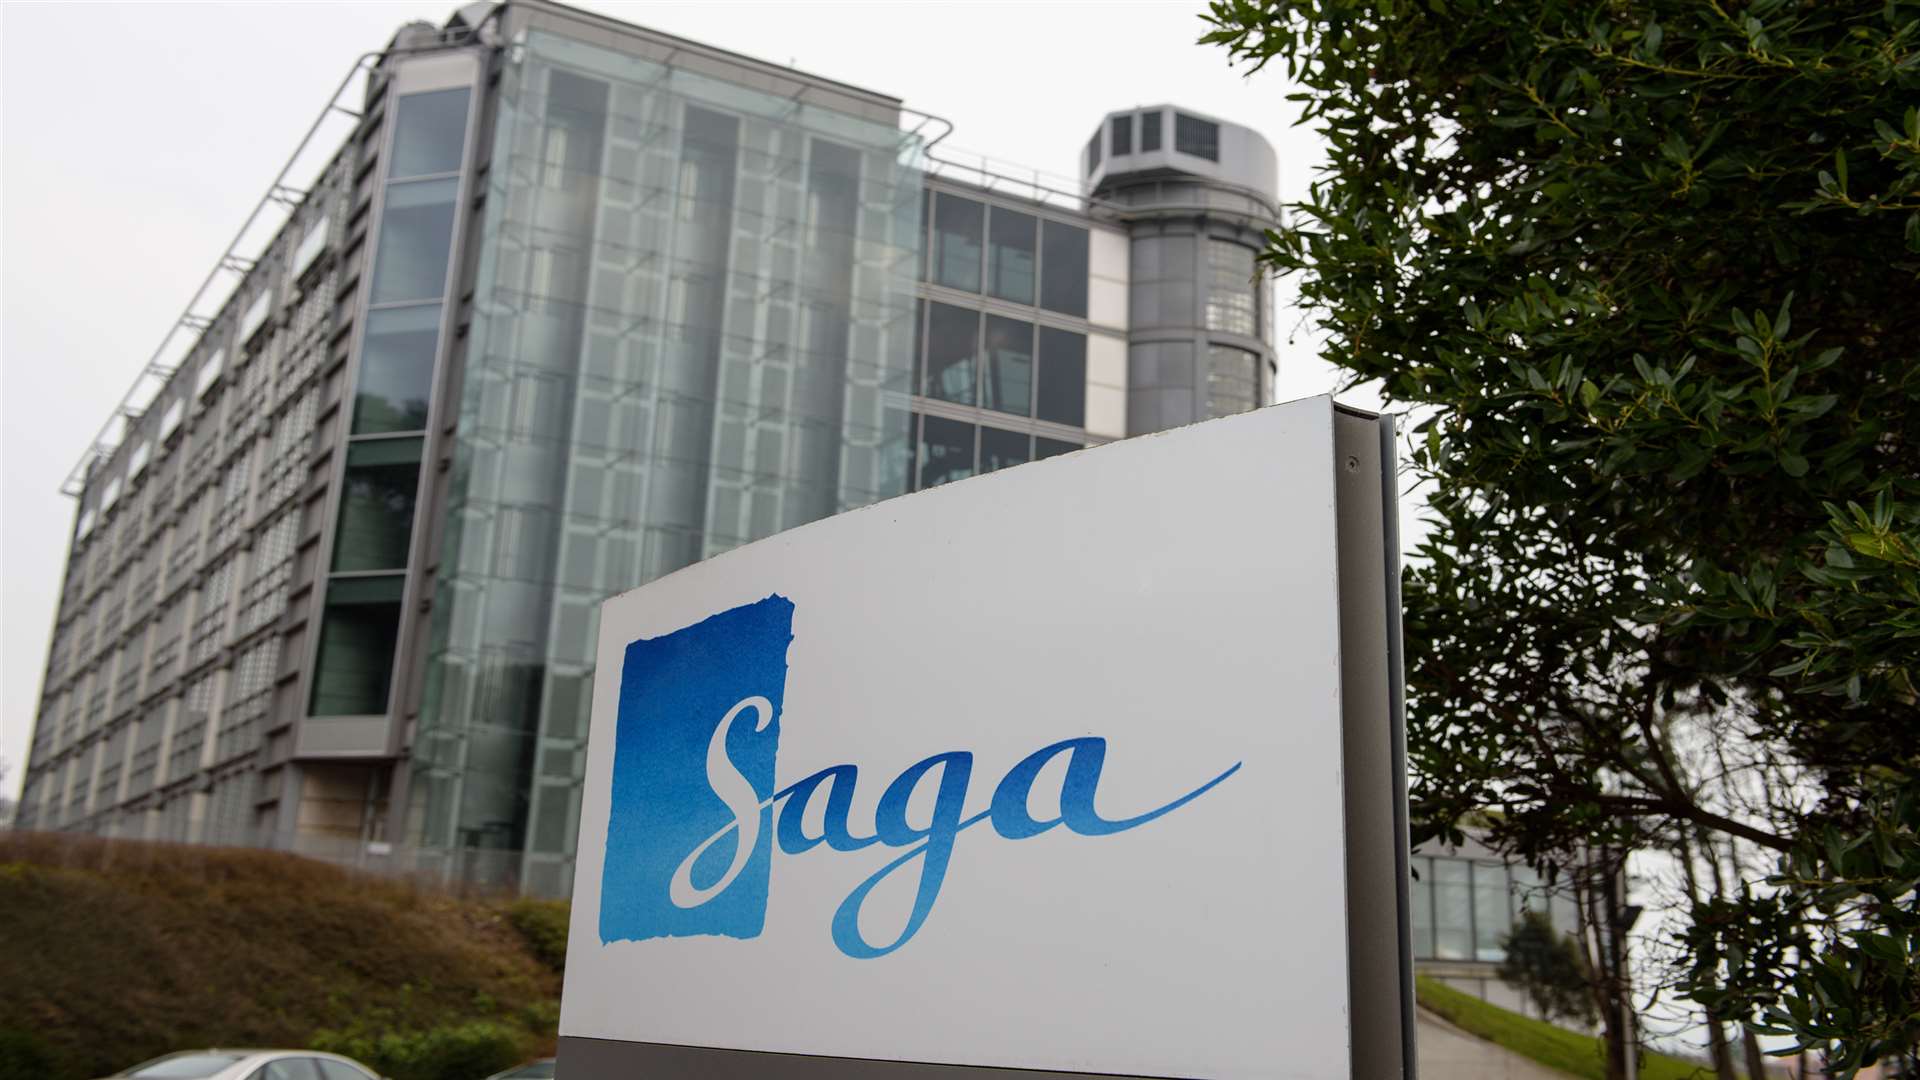 Saga's offices in Sandgate, near Folkestone